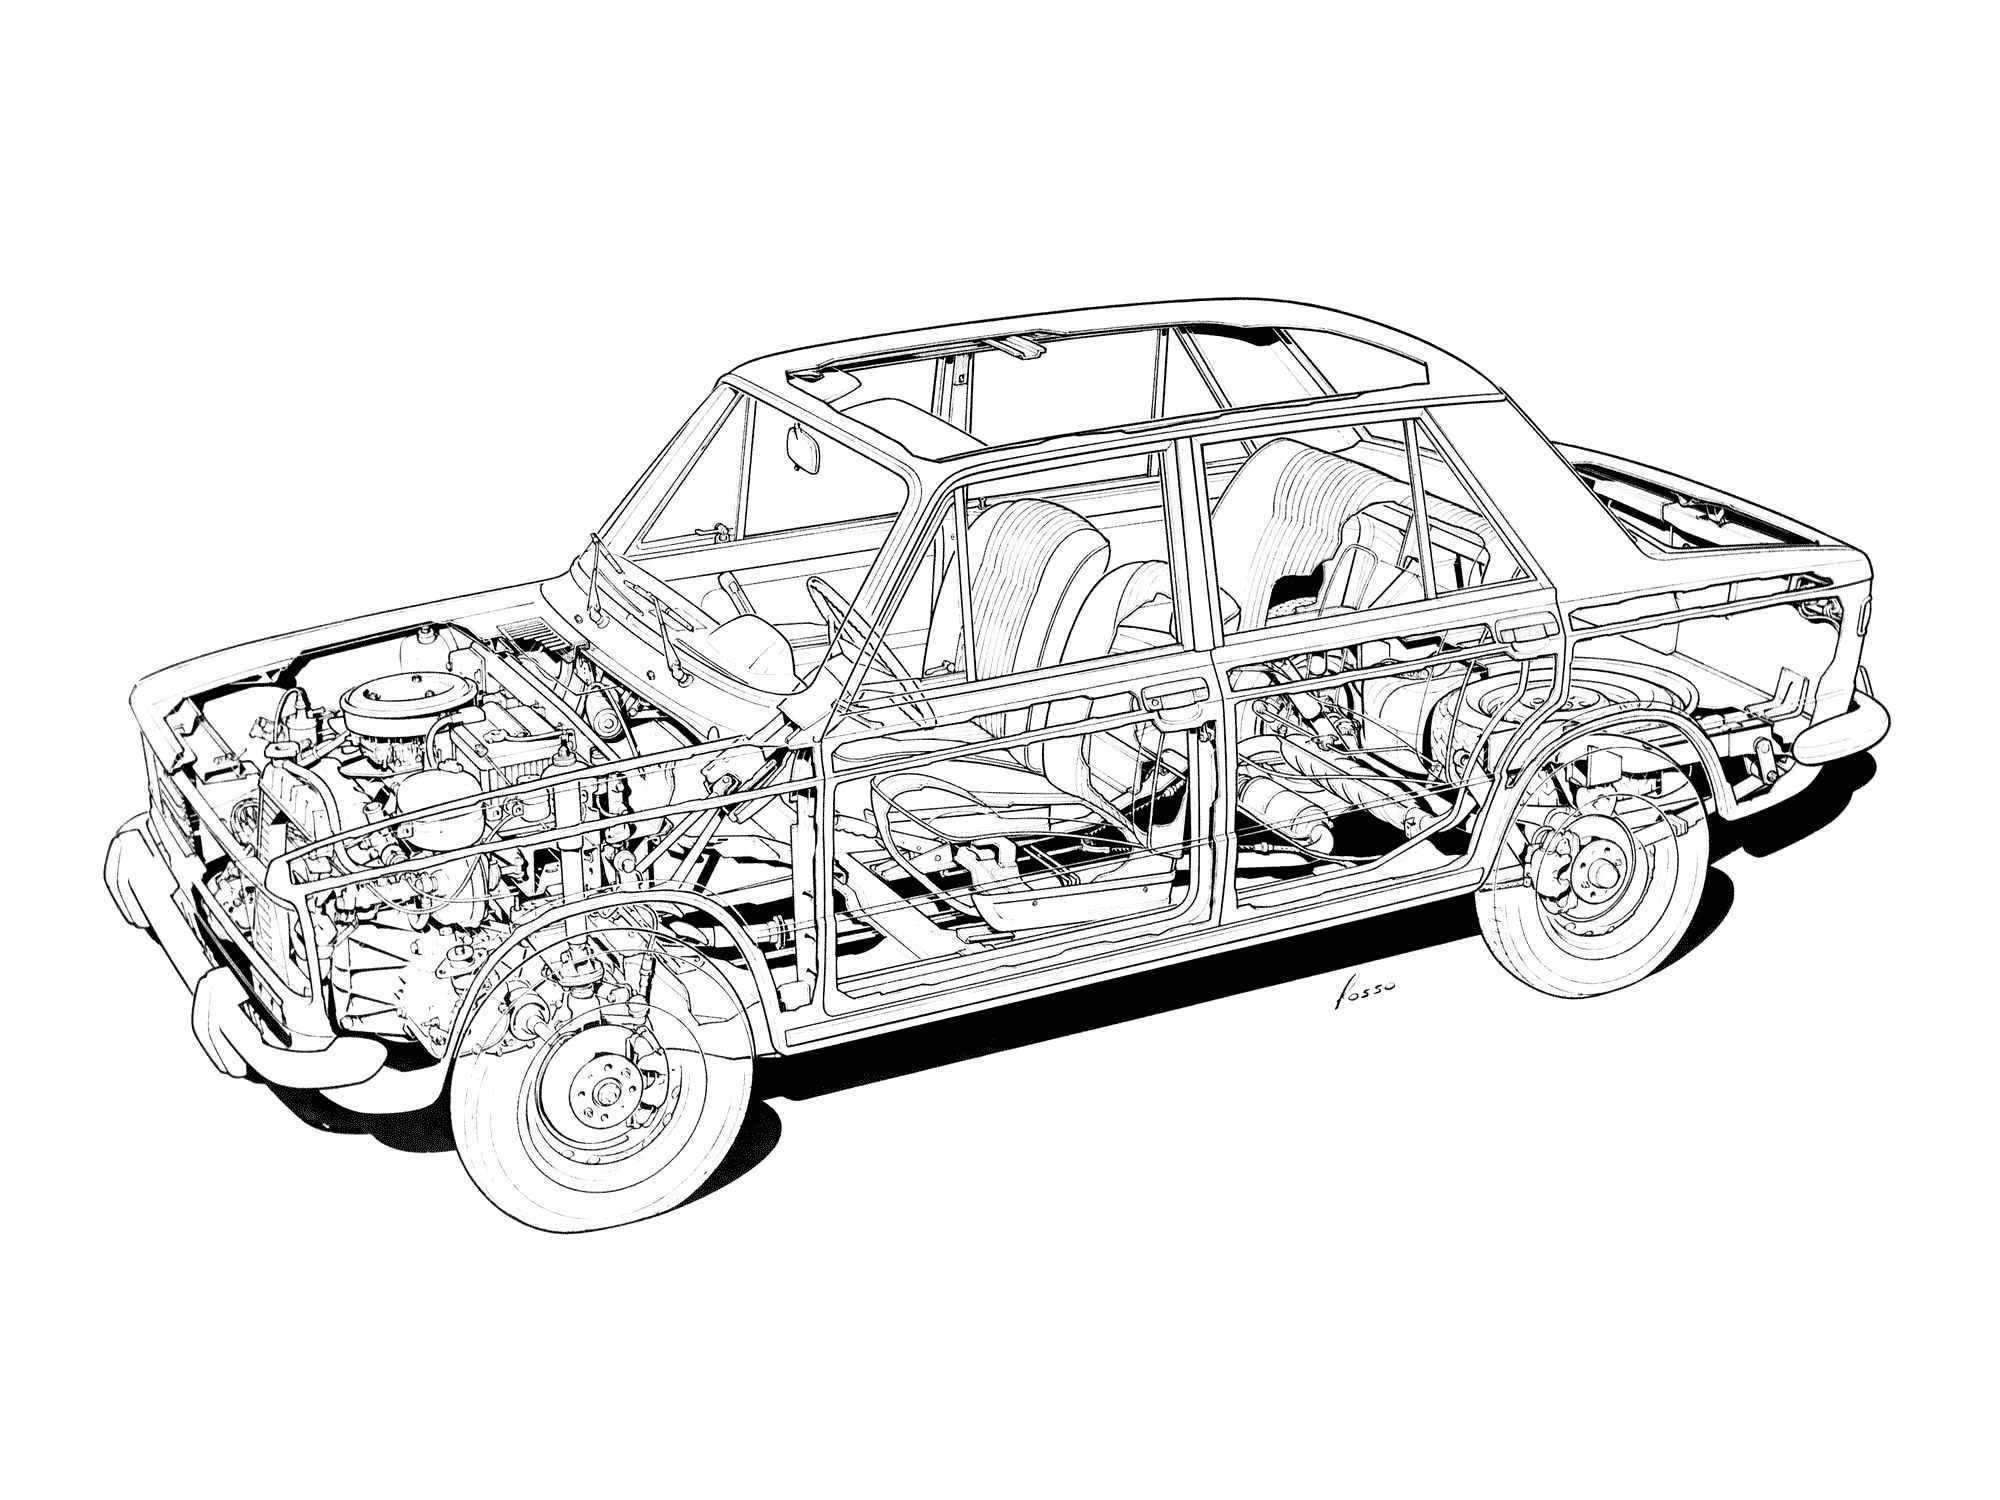 Autobianchi A111 cutaway drawing